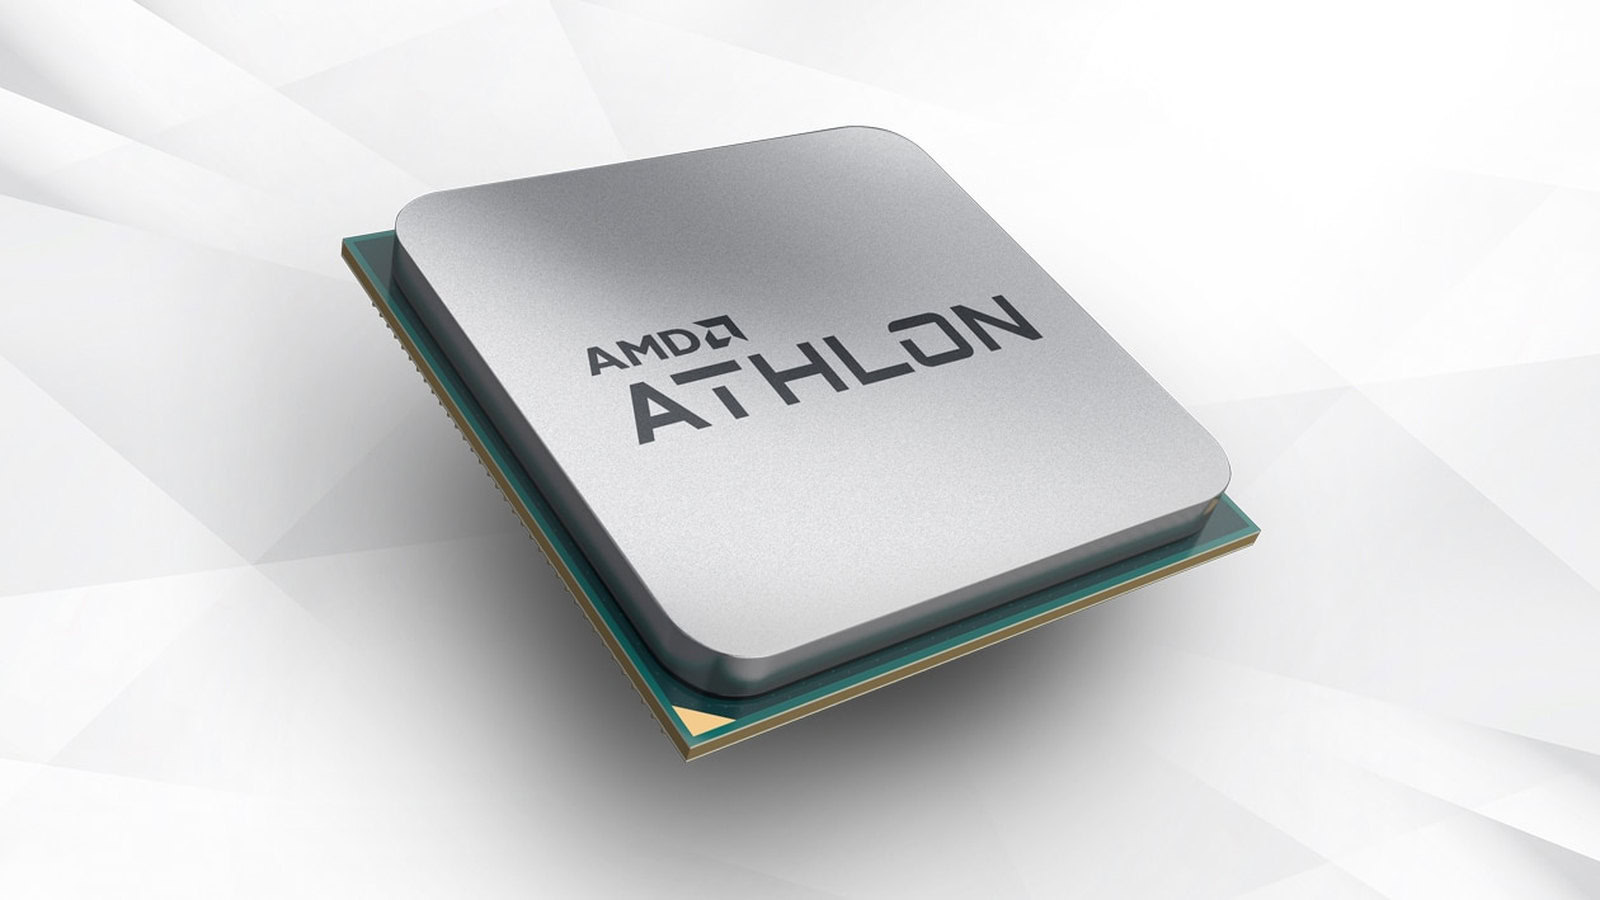 AMD Athlon processor on a white background